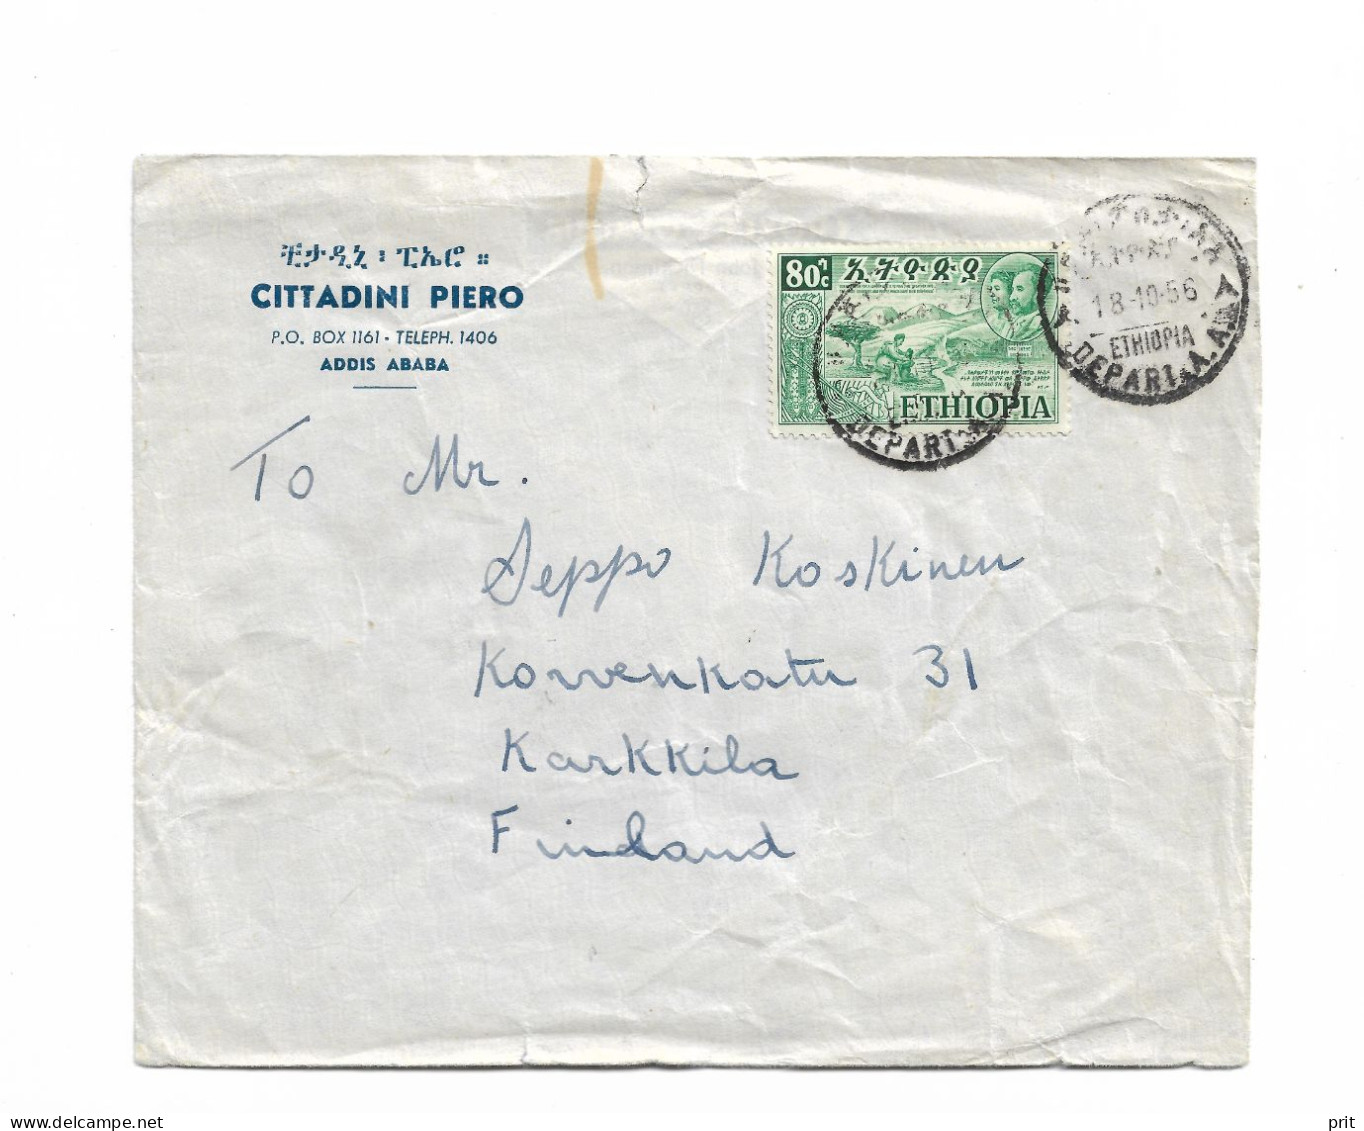 Addis Ababa Ethiopia Cover To Karkkila, Finland 1956 - Etiopía